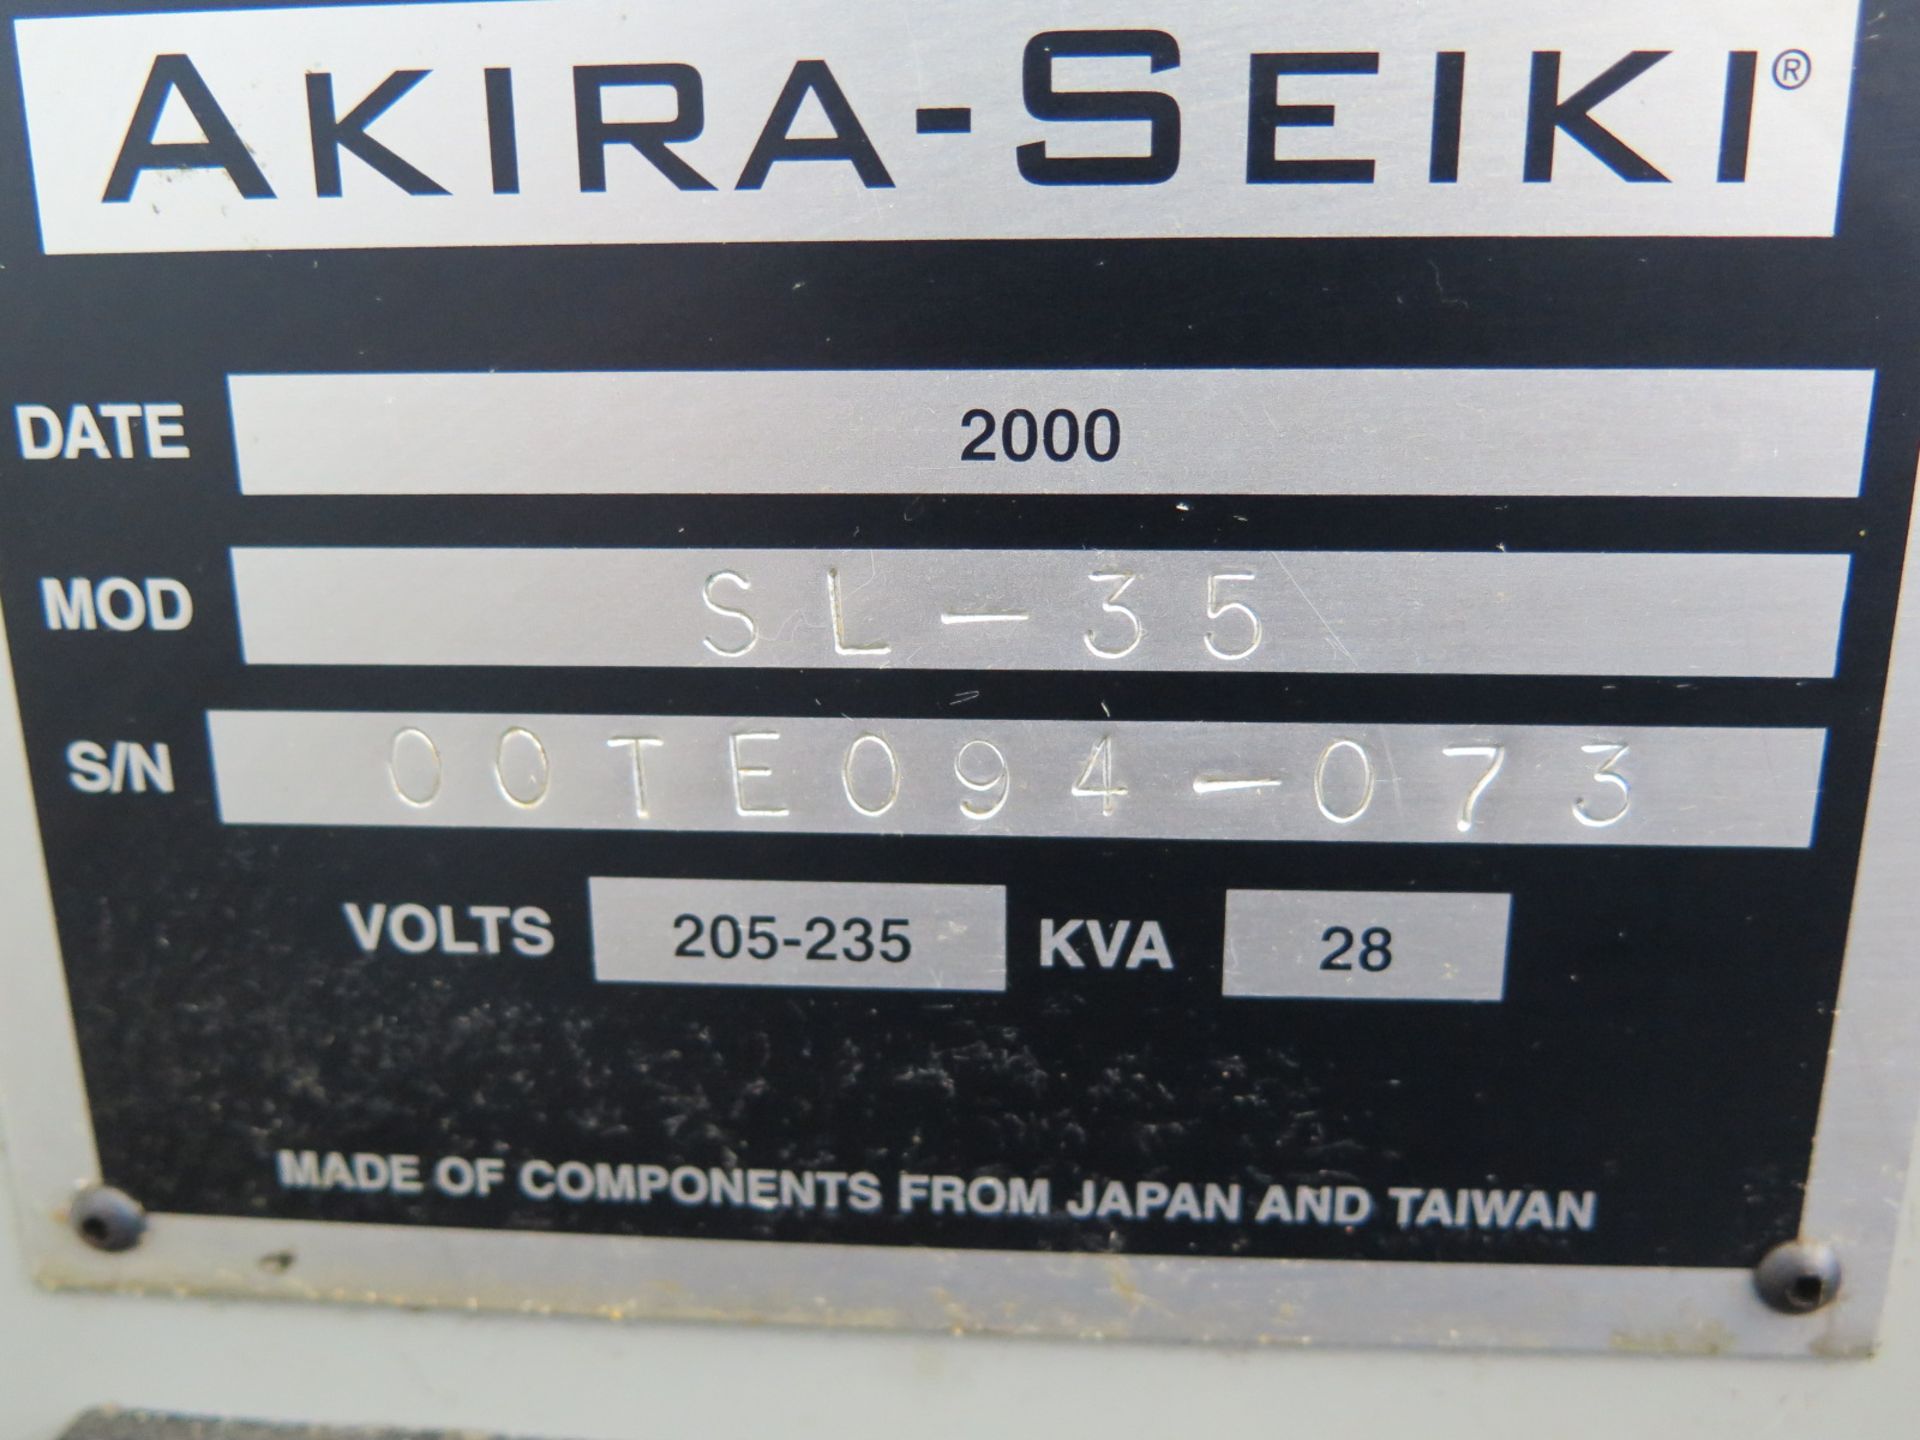 2000 Akira Seiki SL-35 CNC Turning Center s/n 00TE094-073 w/ Fanuc Series 0-T Controls, 12-Station - Image 8 of 8